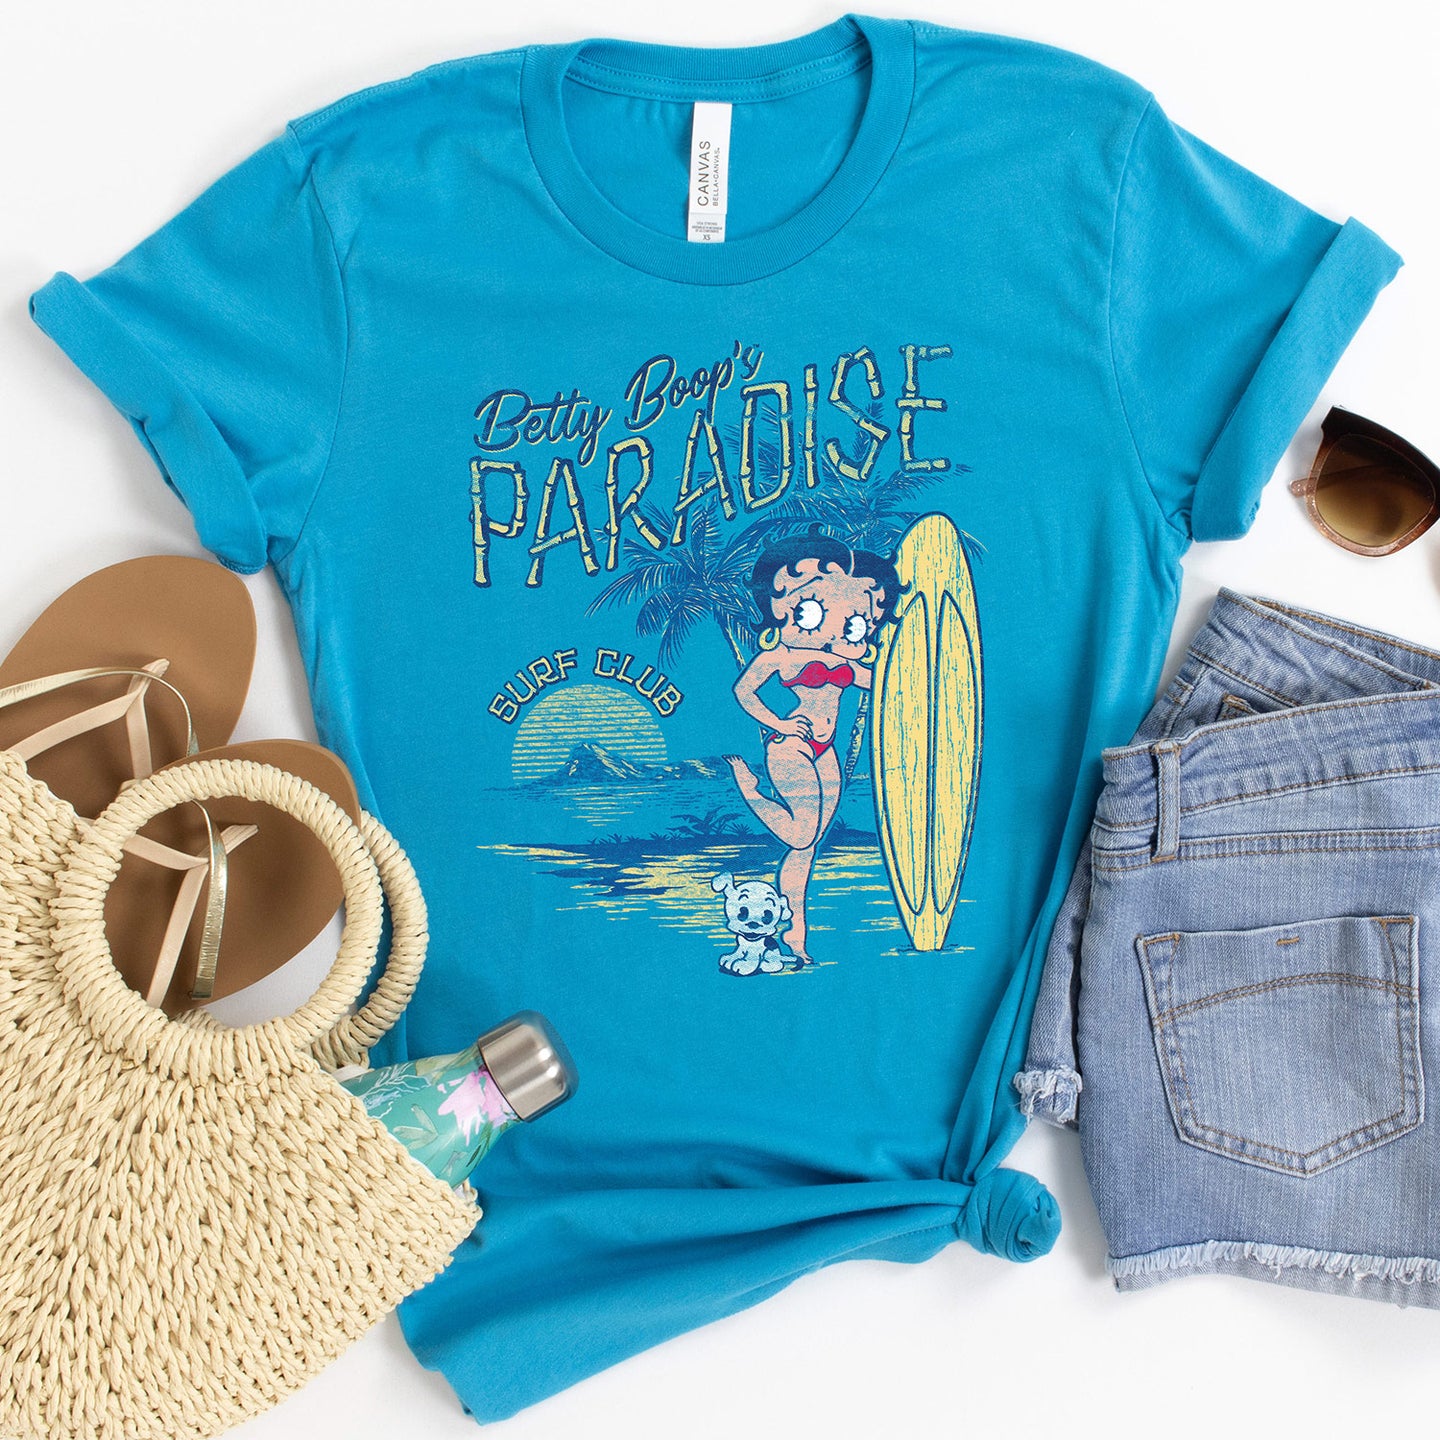 Betty Boop's Paradise T-shirt